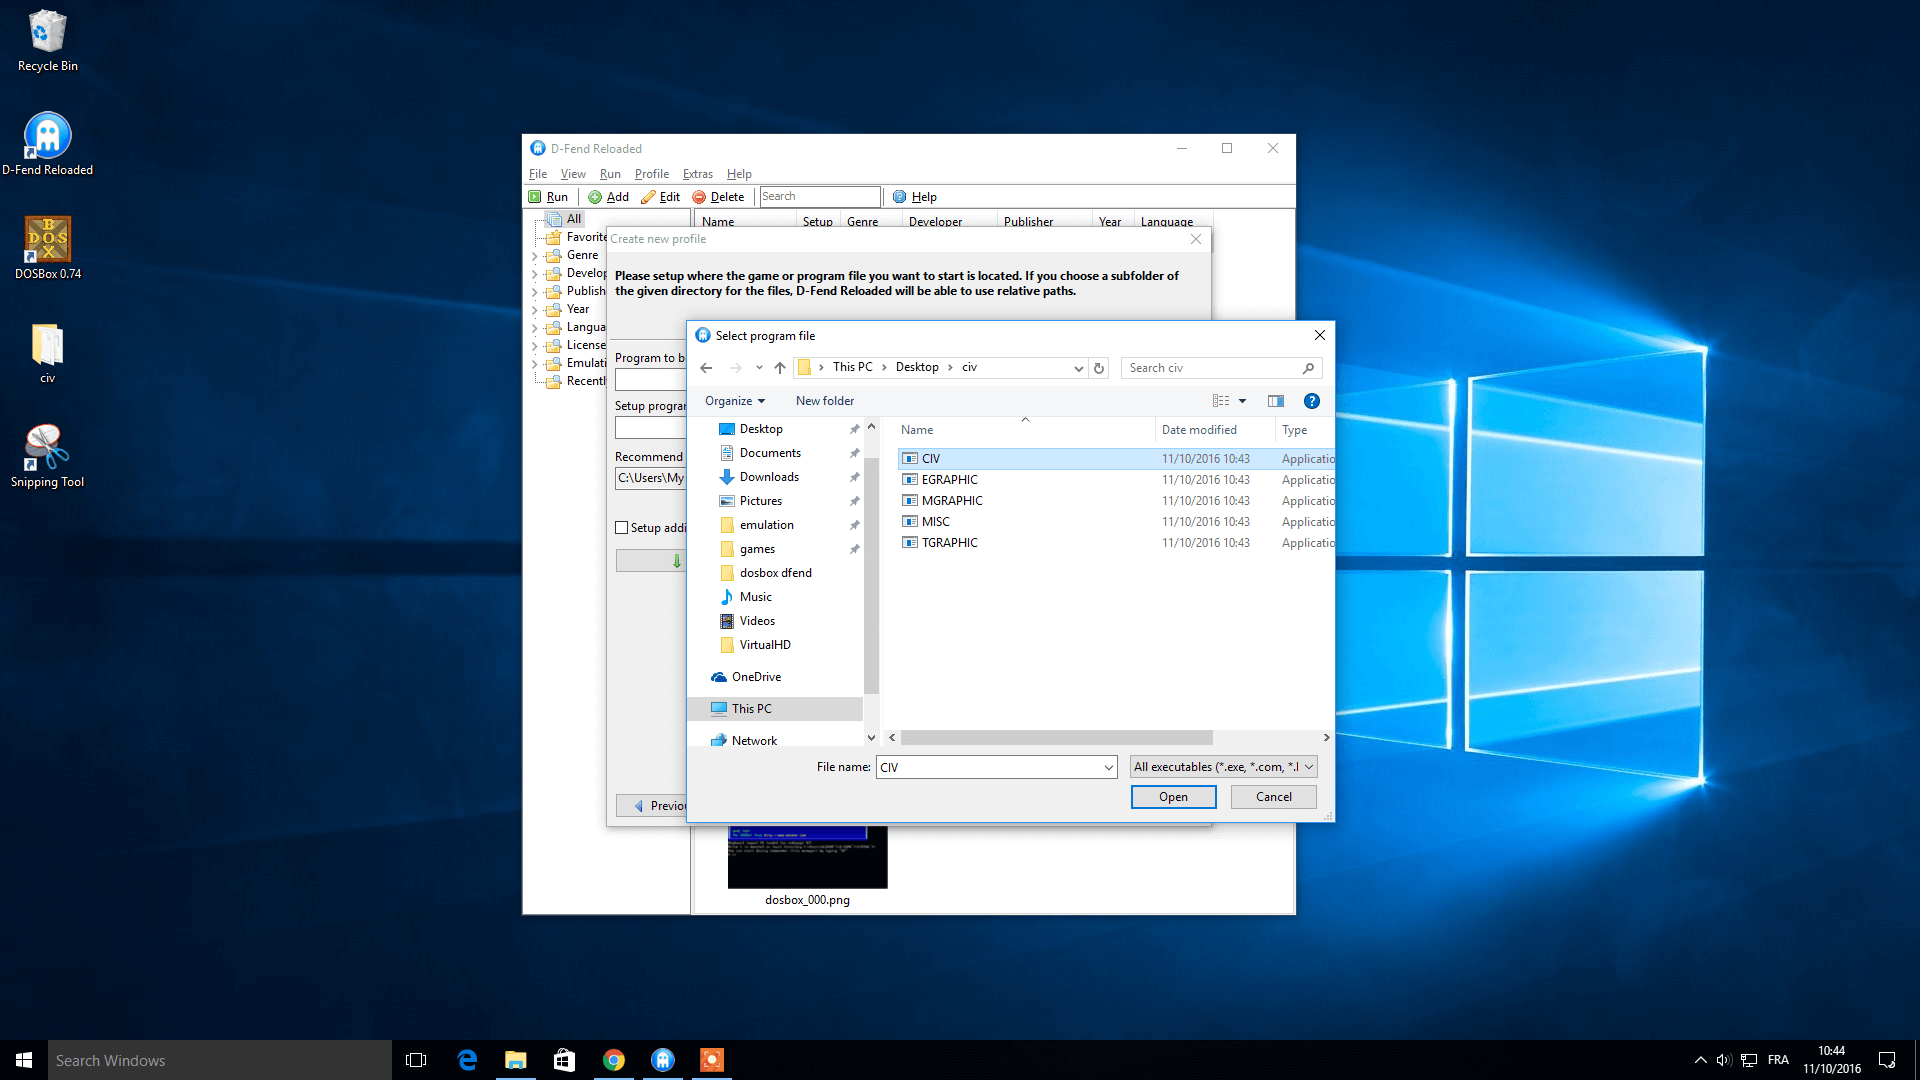 LaunchBox Download for PC Windows 10, 8, 7 32/64 bit Free